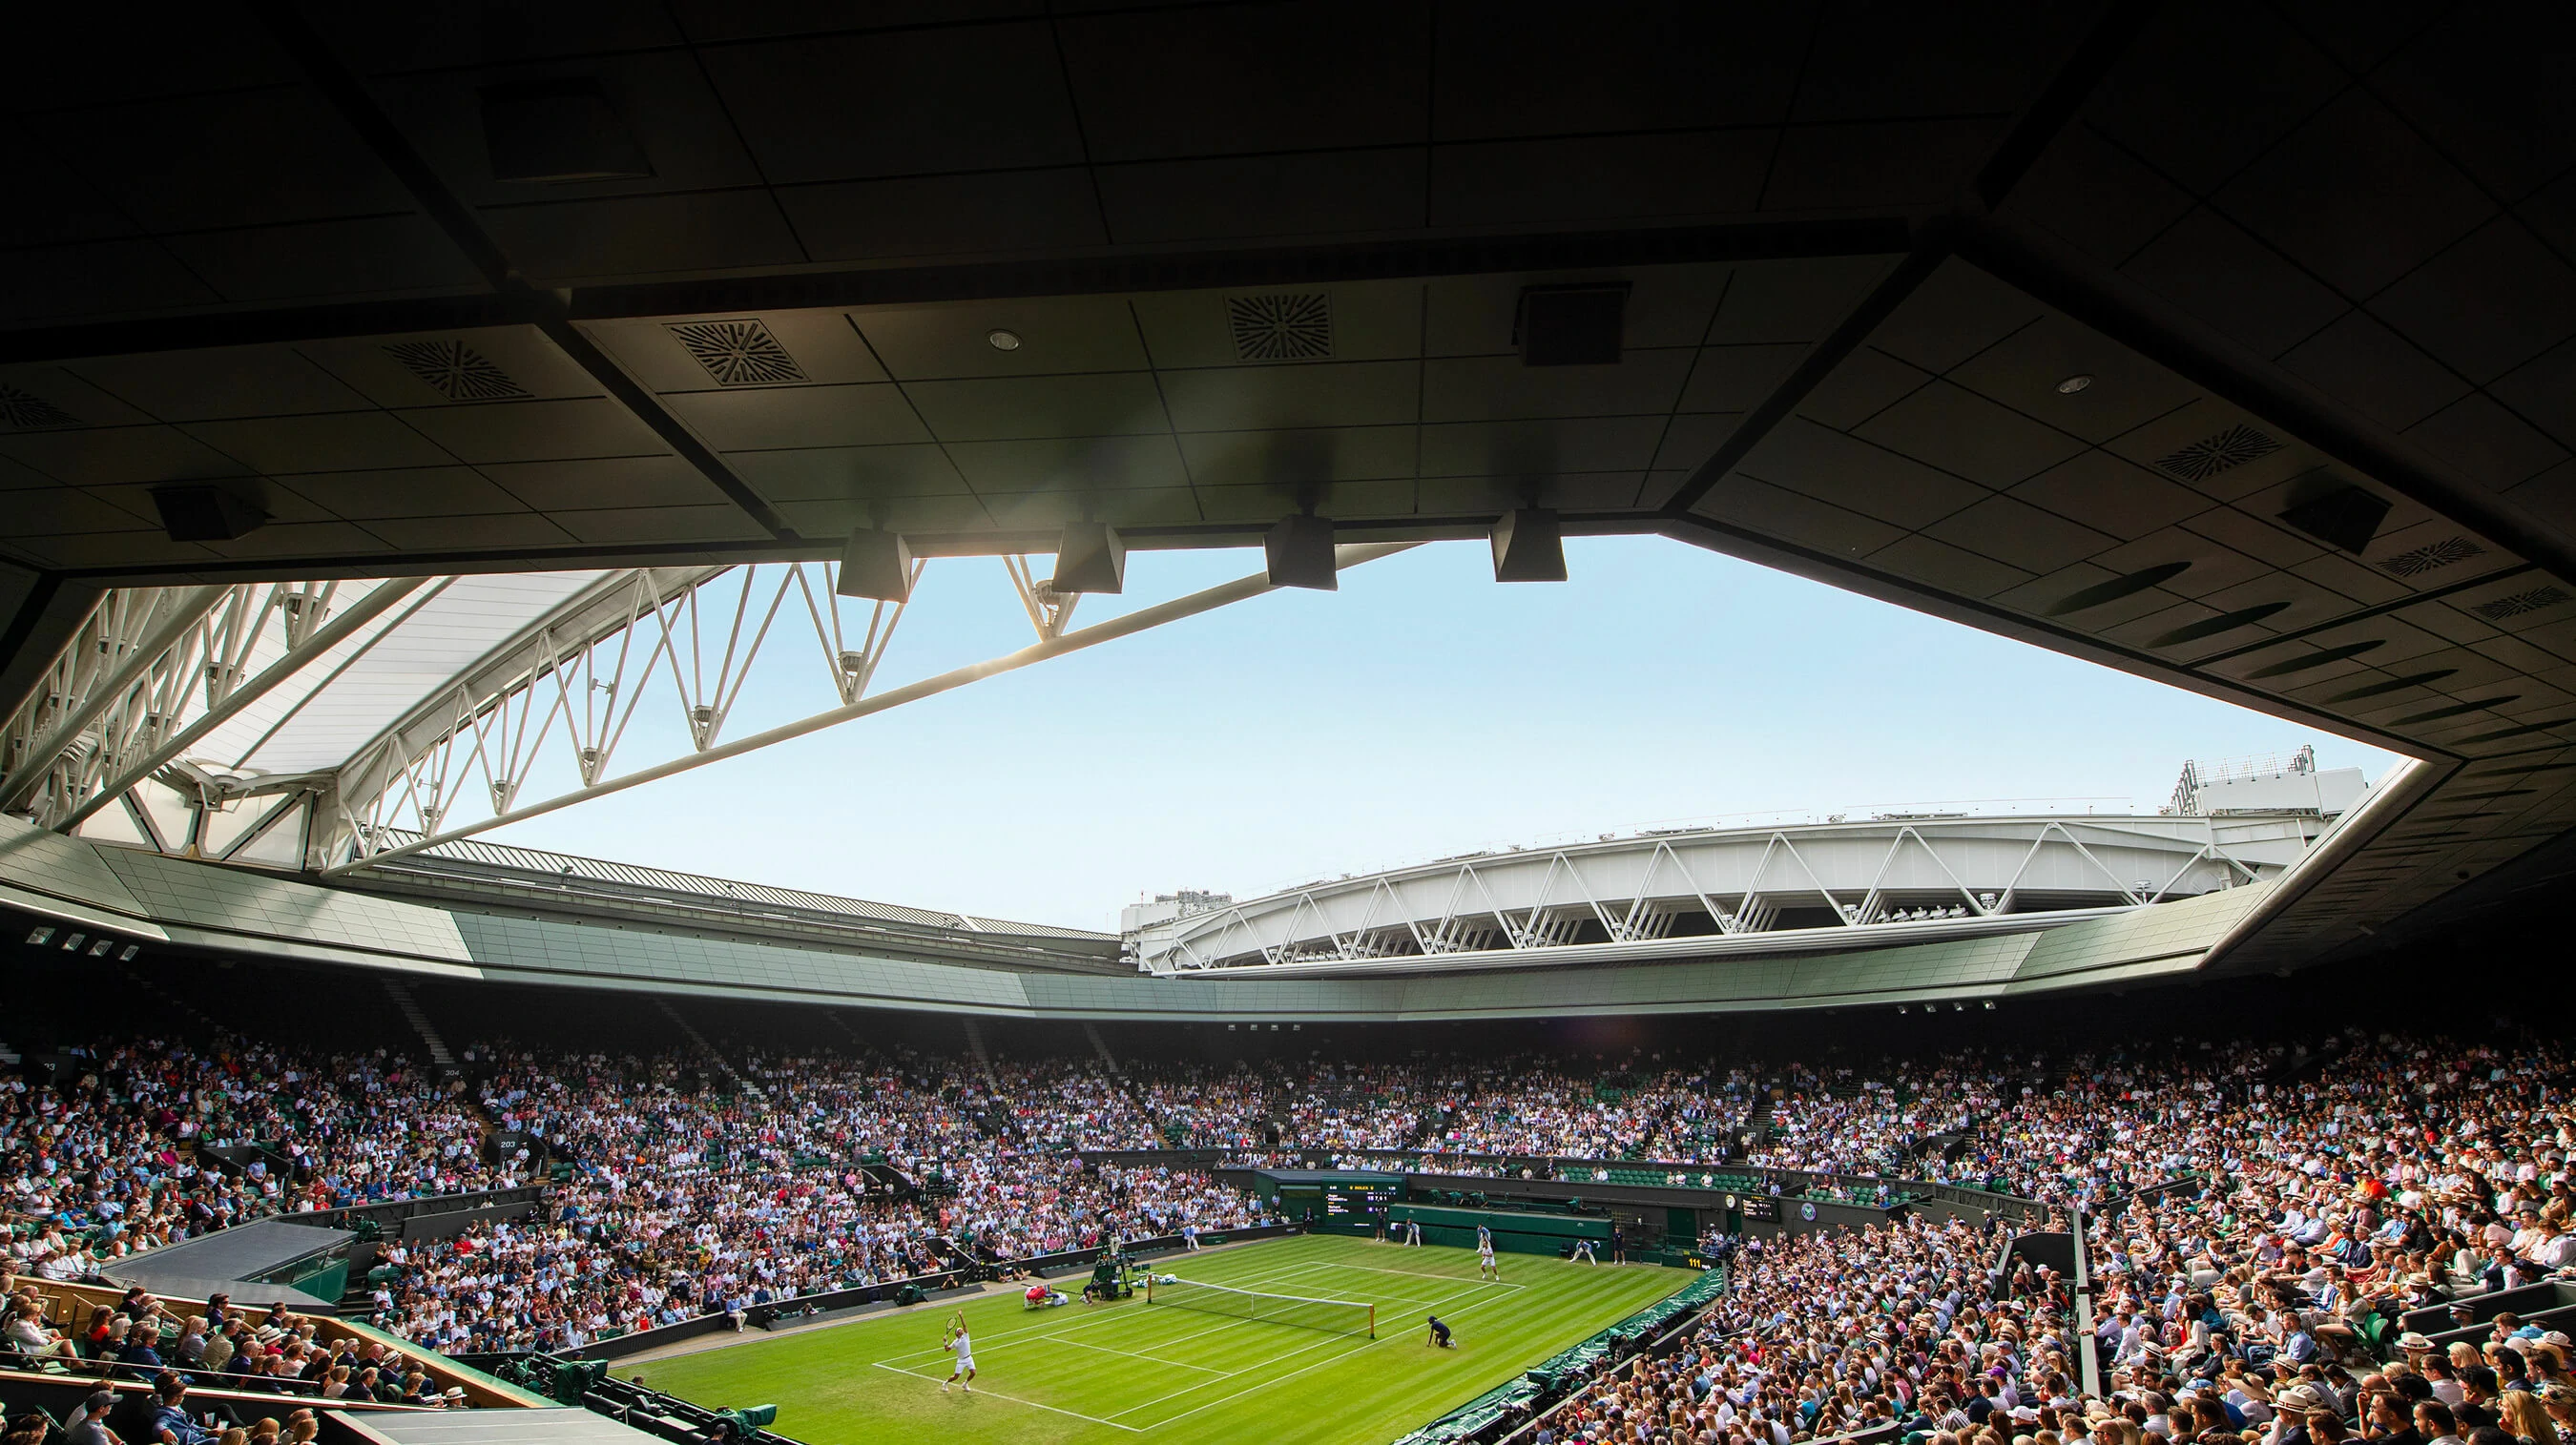 Rolex e Wimbledon: i testimoni